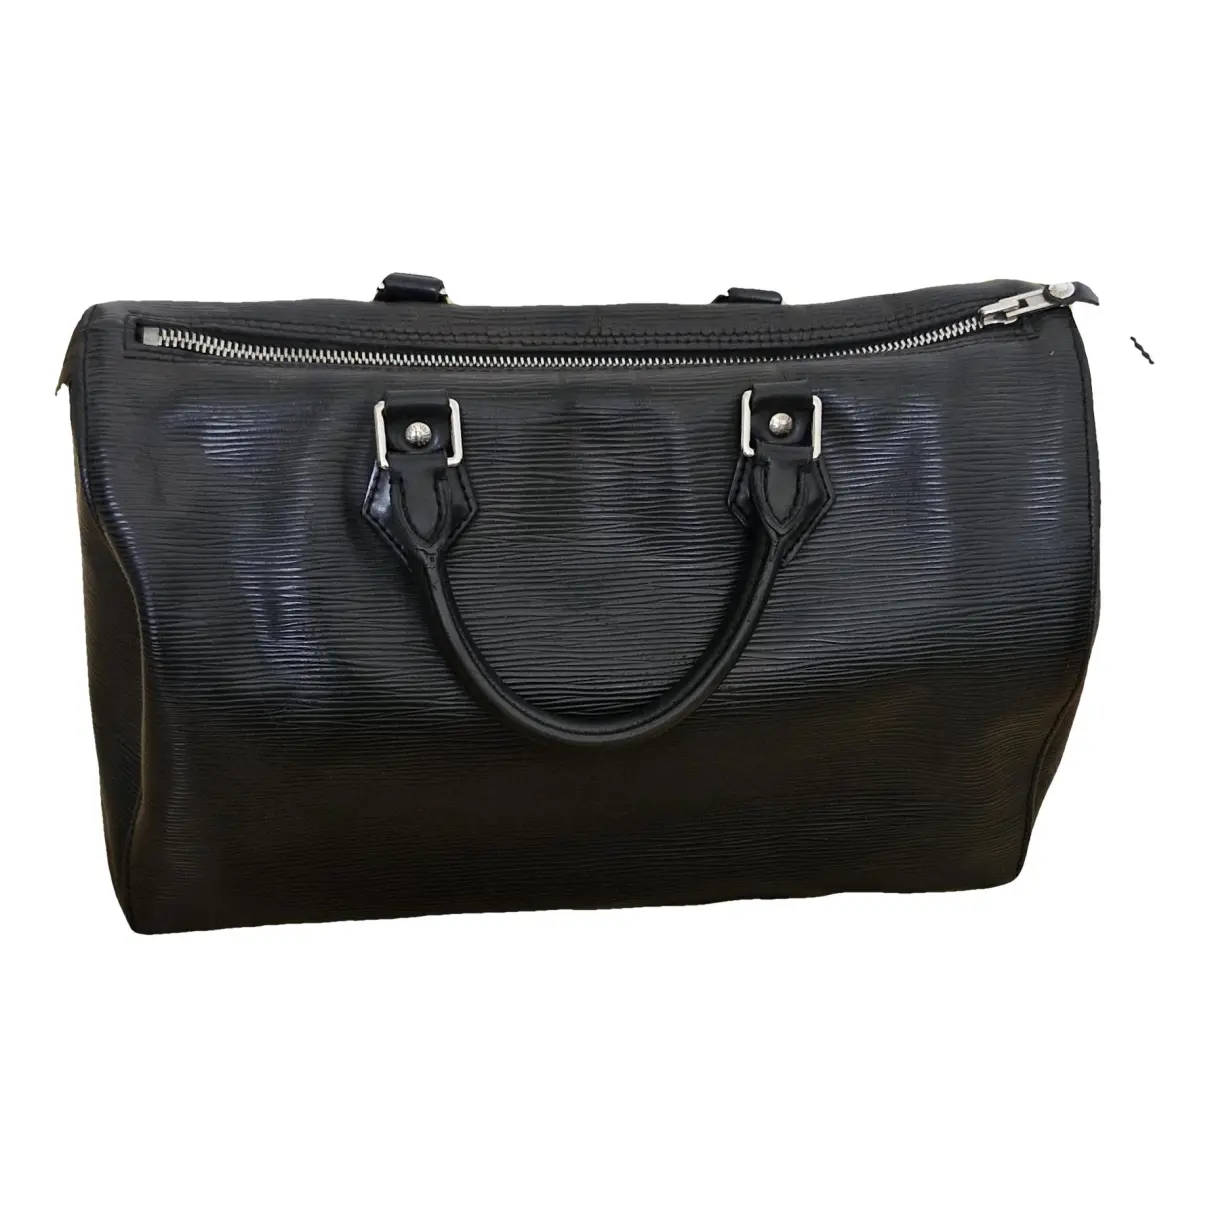 Speedy leather handbag